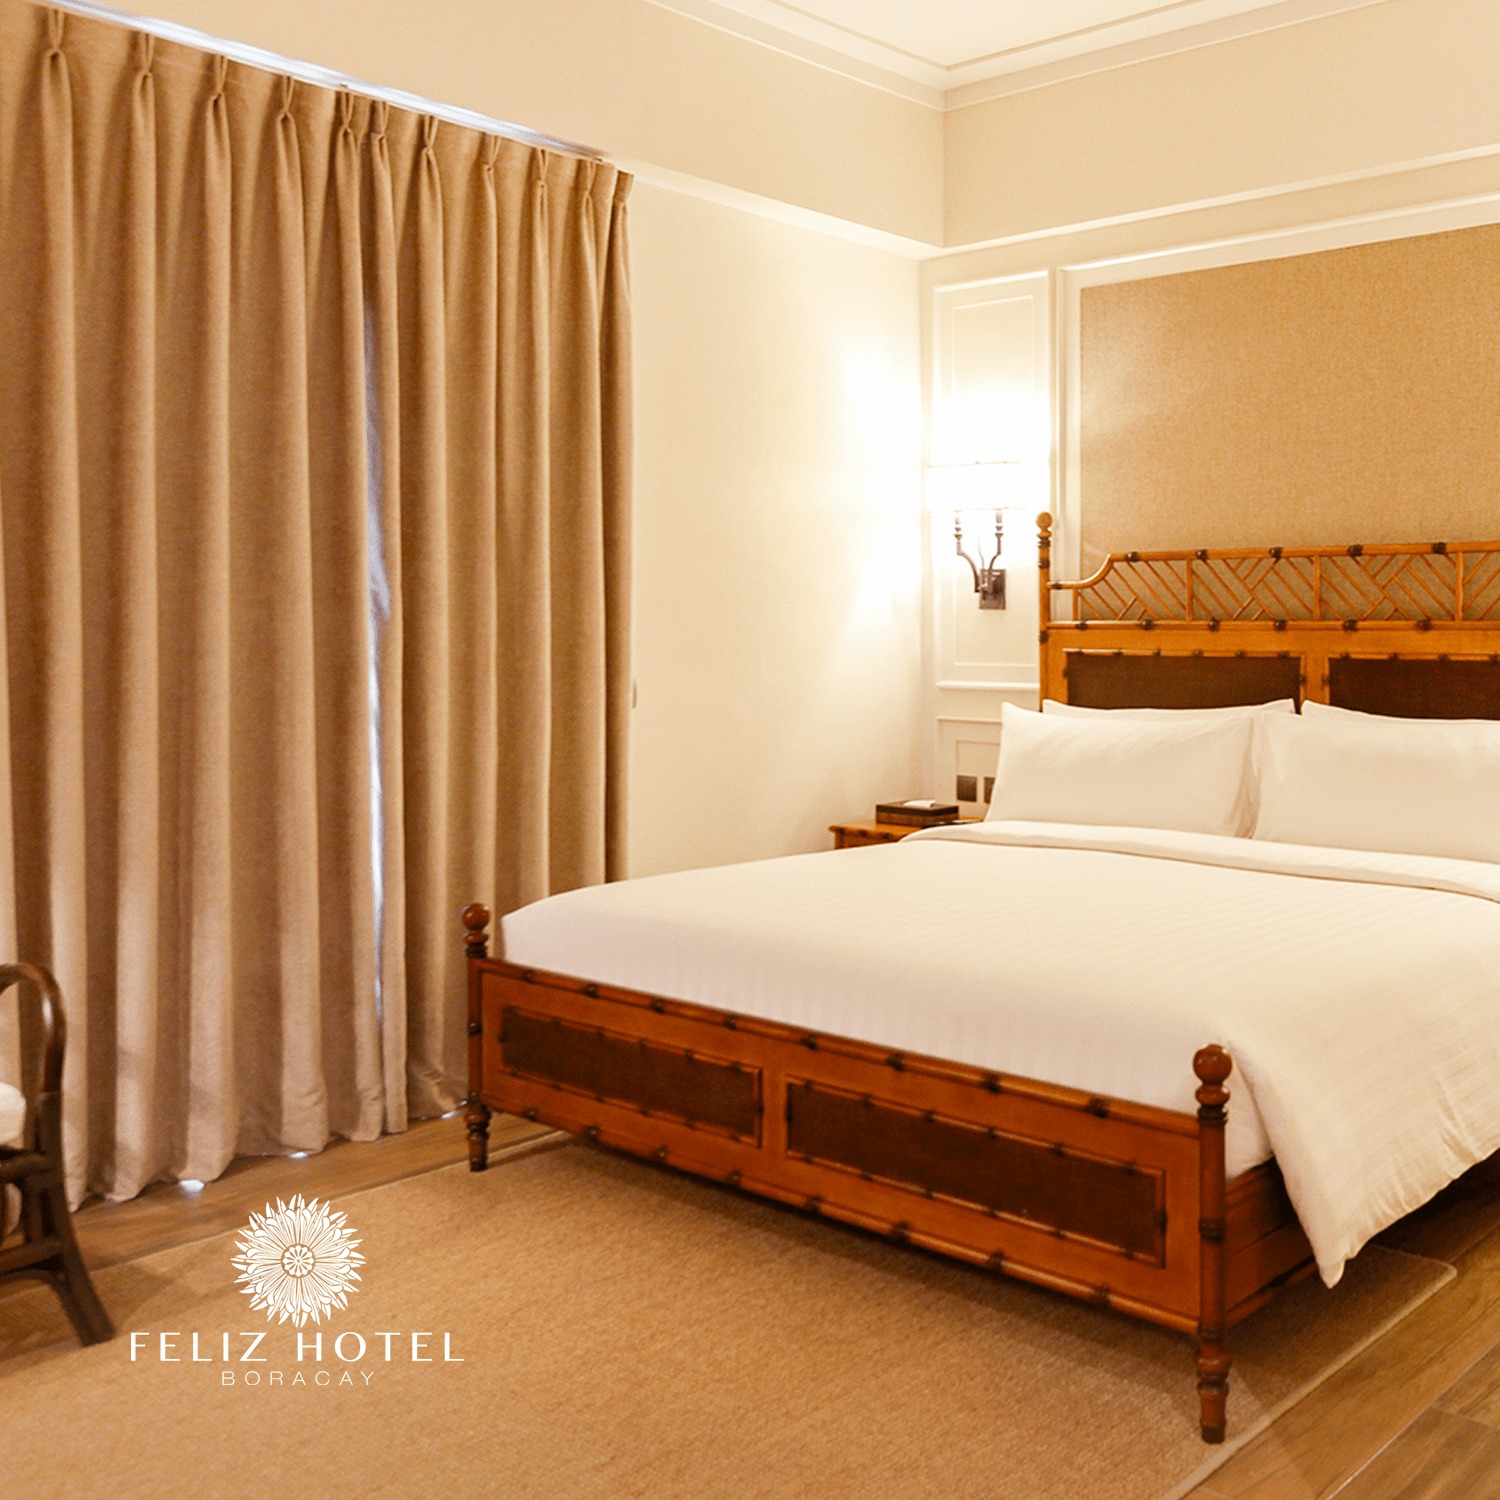 Deluxe King Room at Feliz Hotel Boracay Station 2